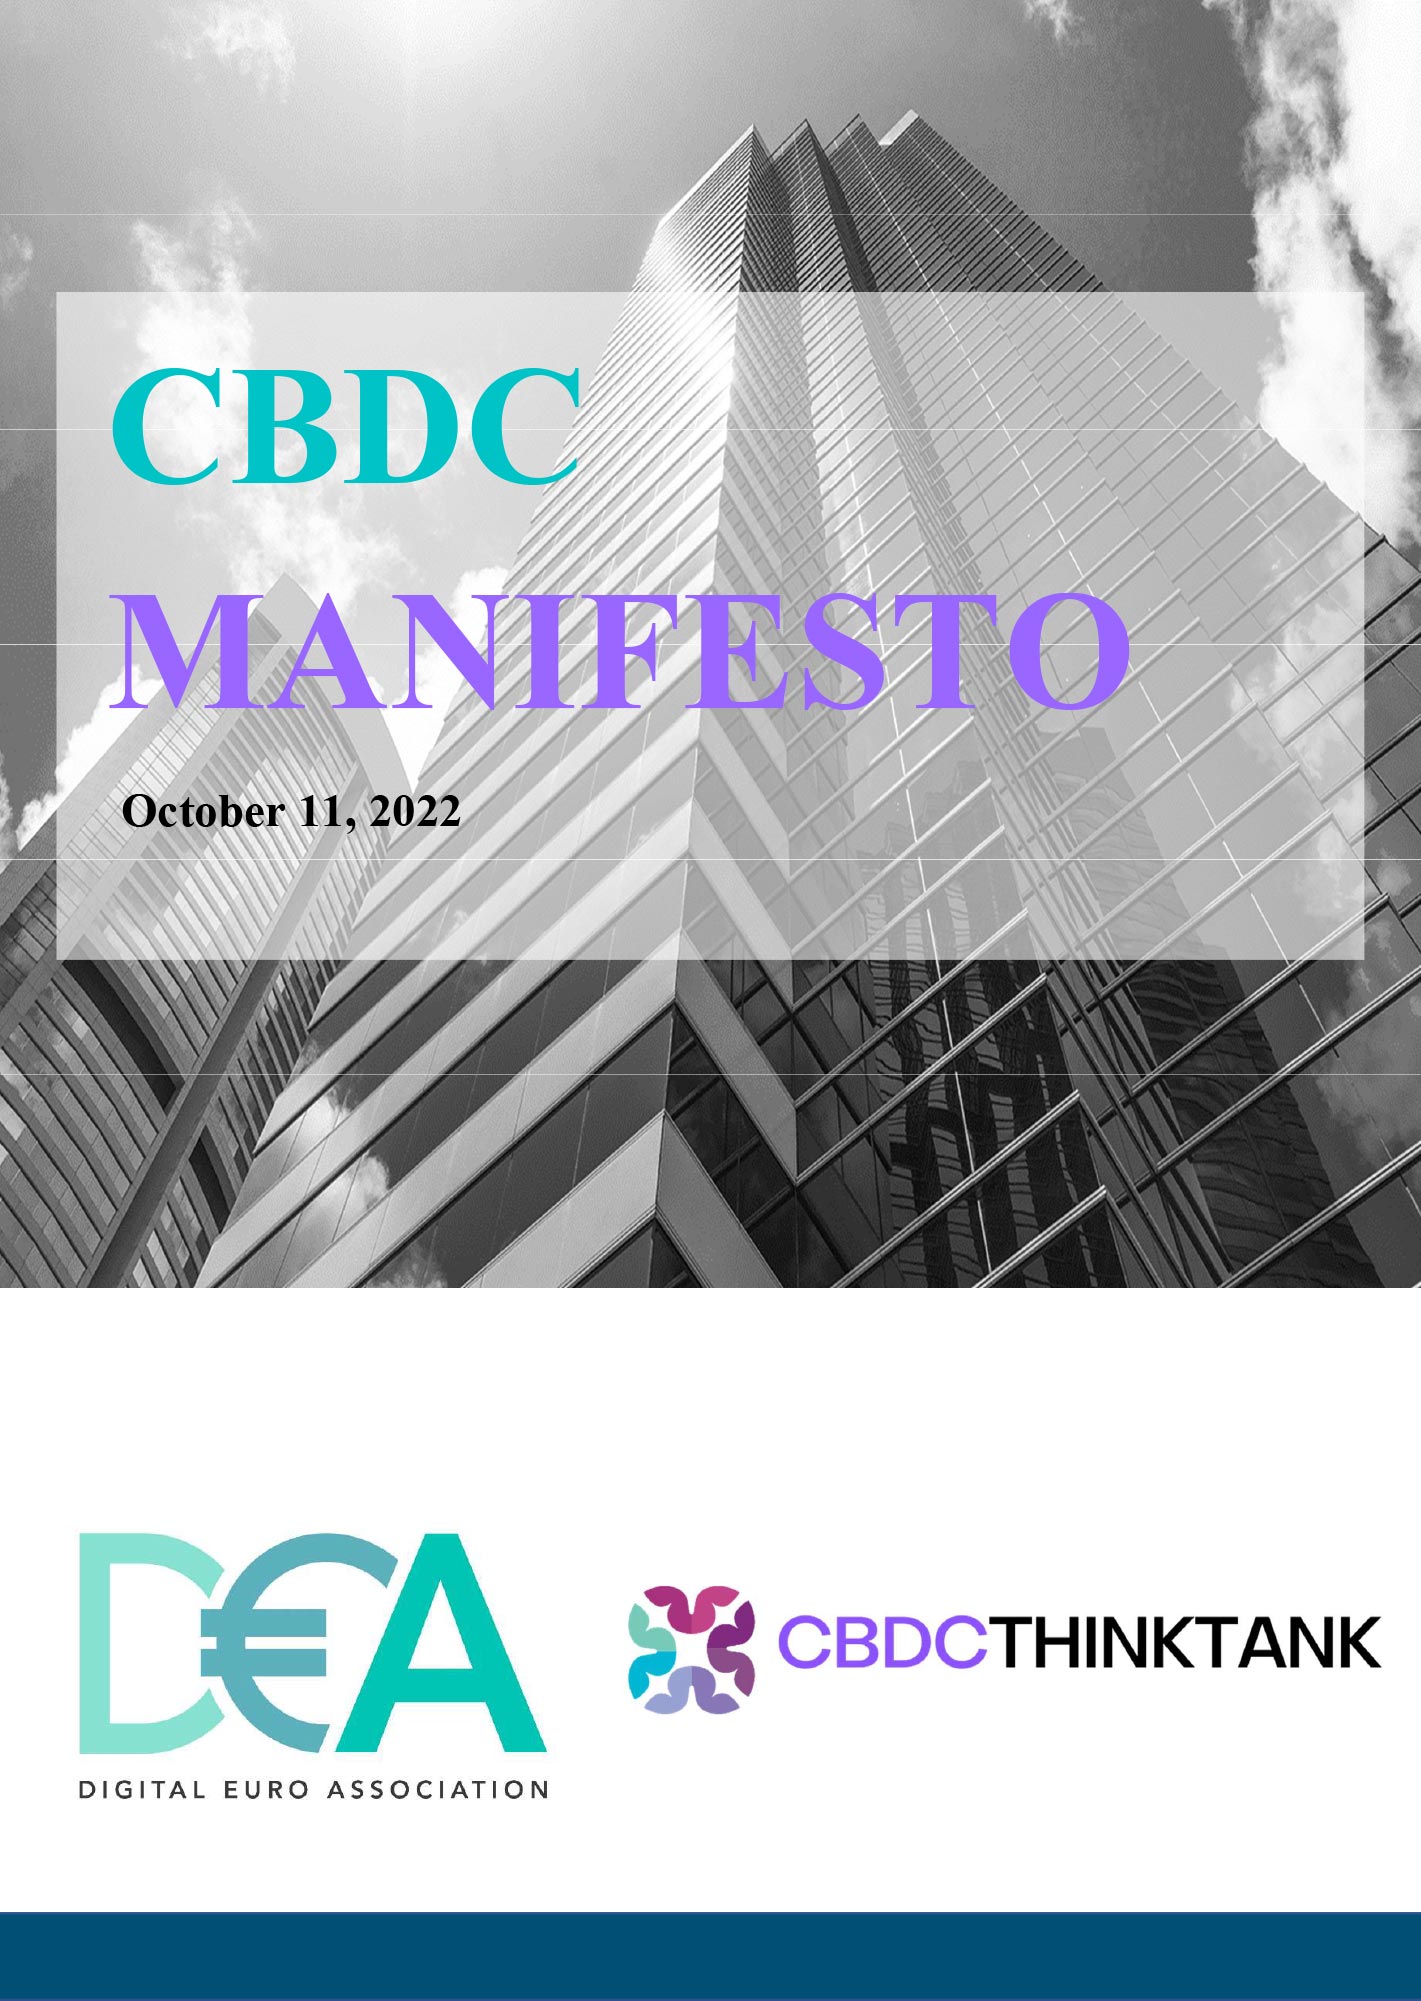 CBDC Manifesto